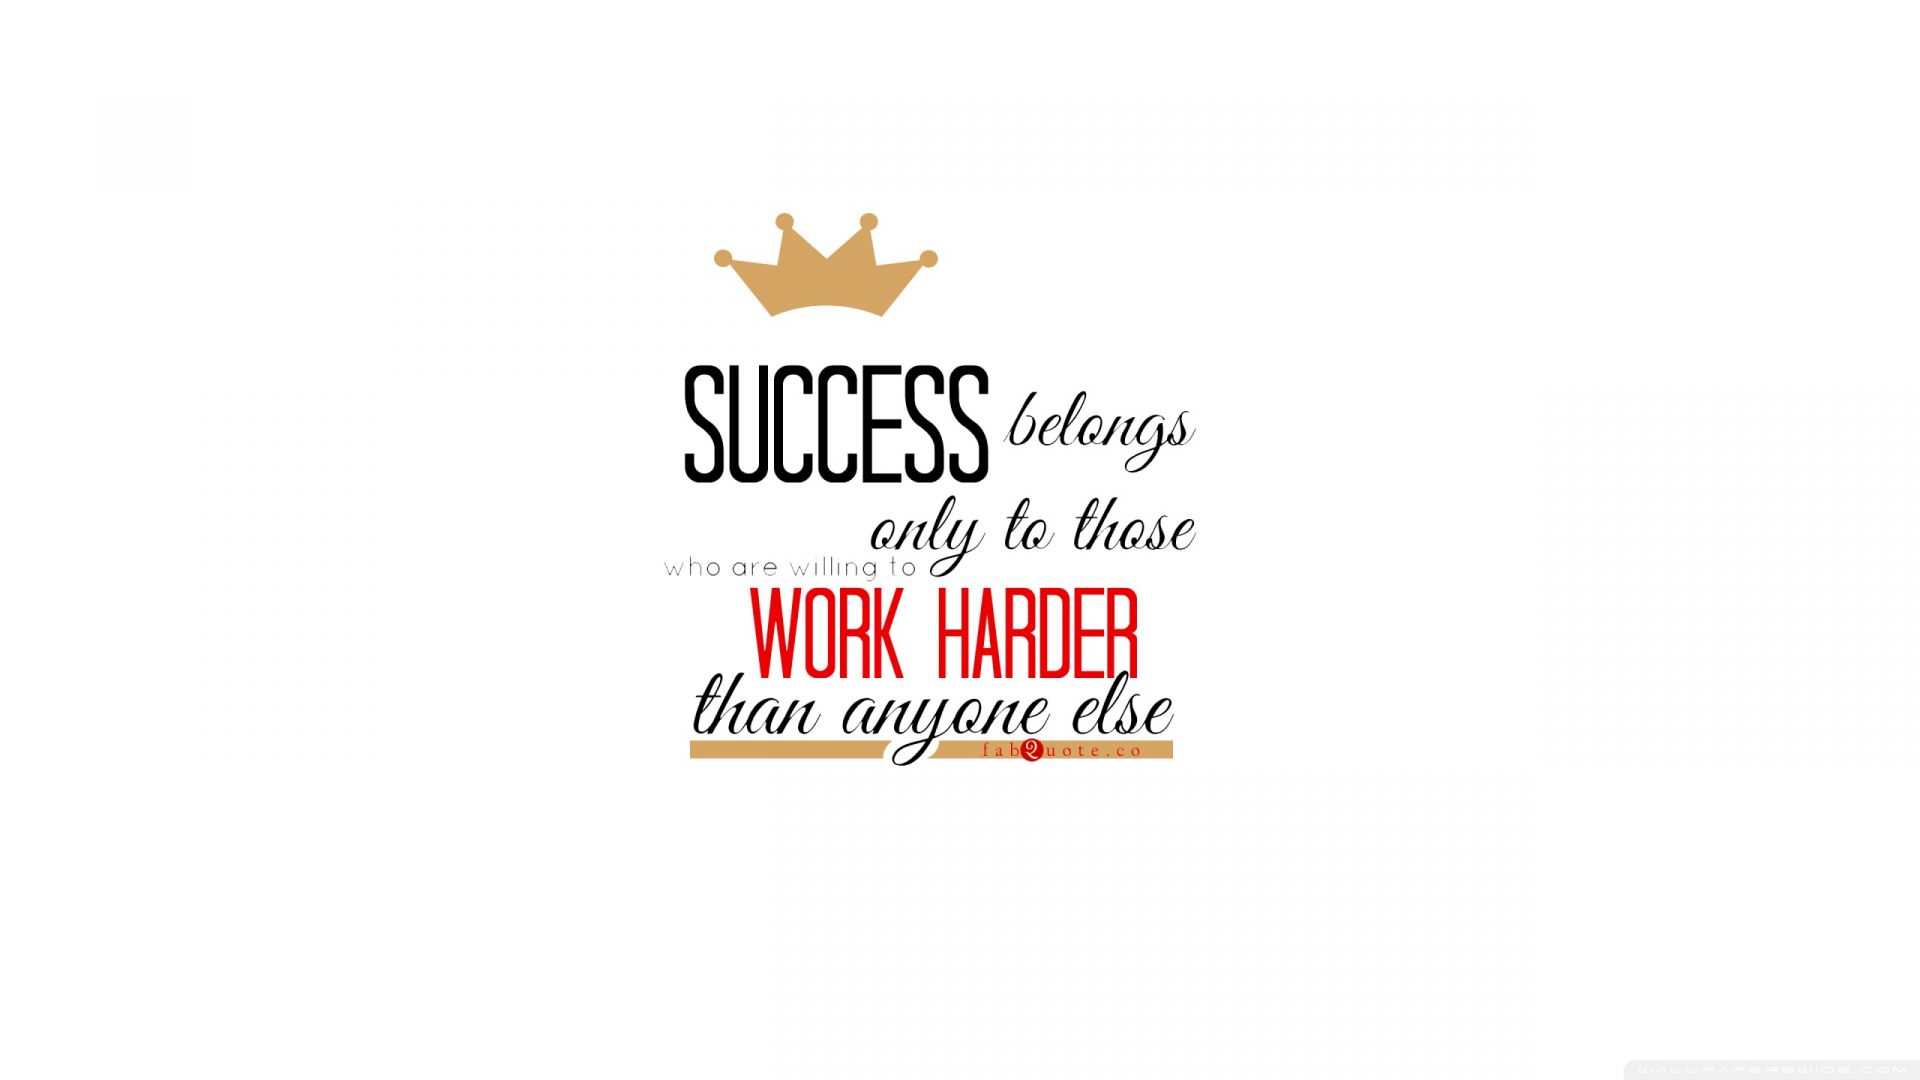 Desktop Wallpaper Quote About Success, Hd Image, Picture, Background, J2kljr